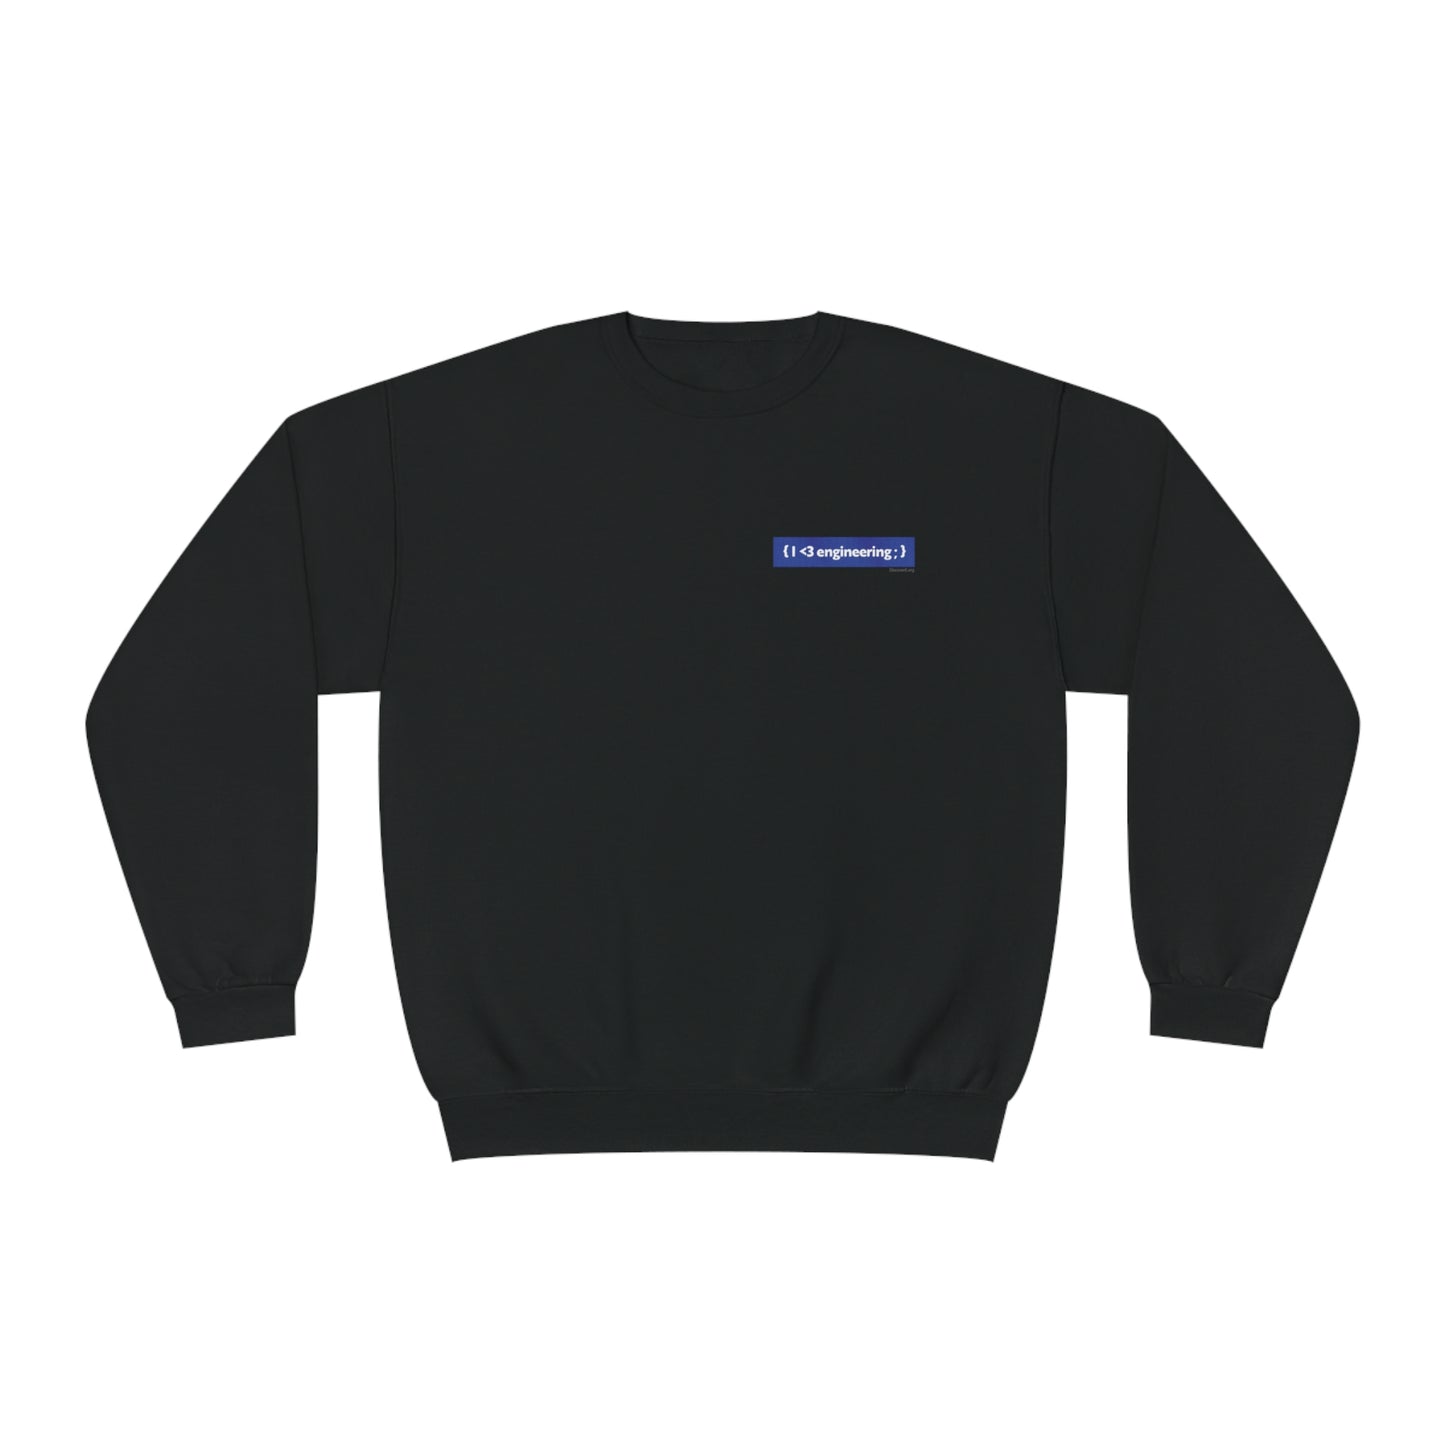 I <3 Engineering Crewneck Sweater